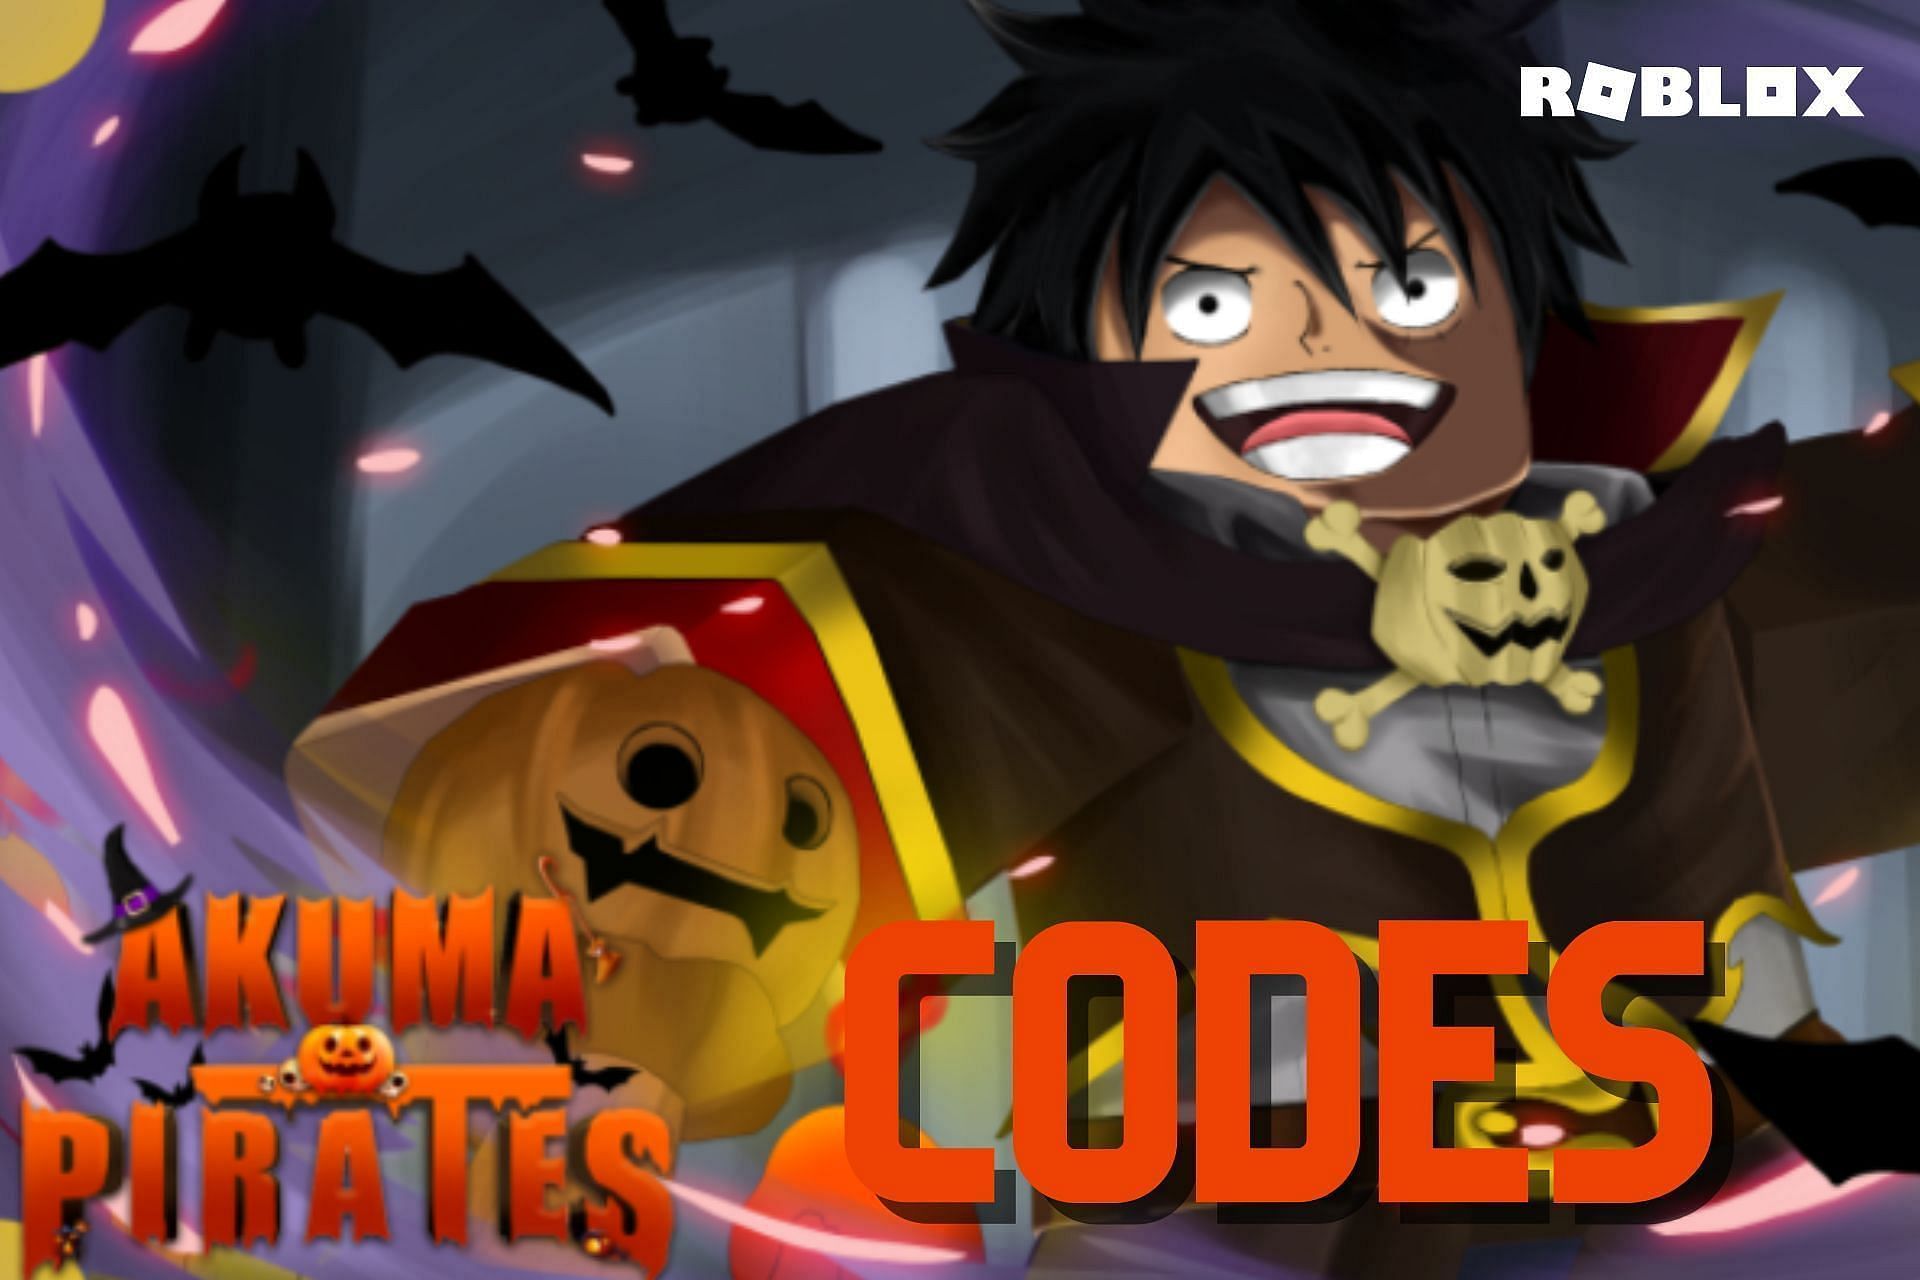 Akuma Pirates codes (Image via Sportskeeda)